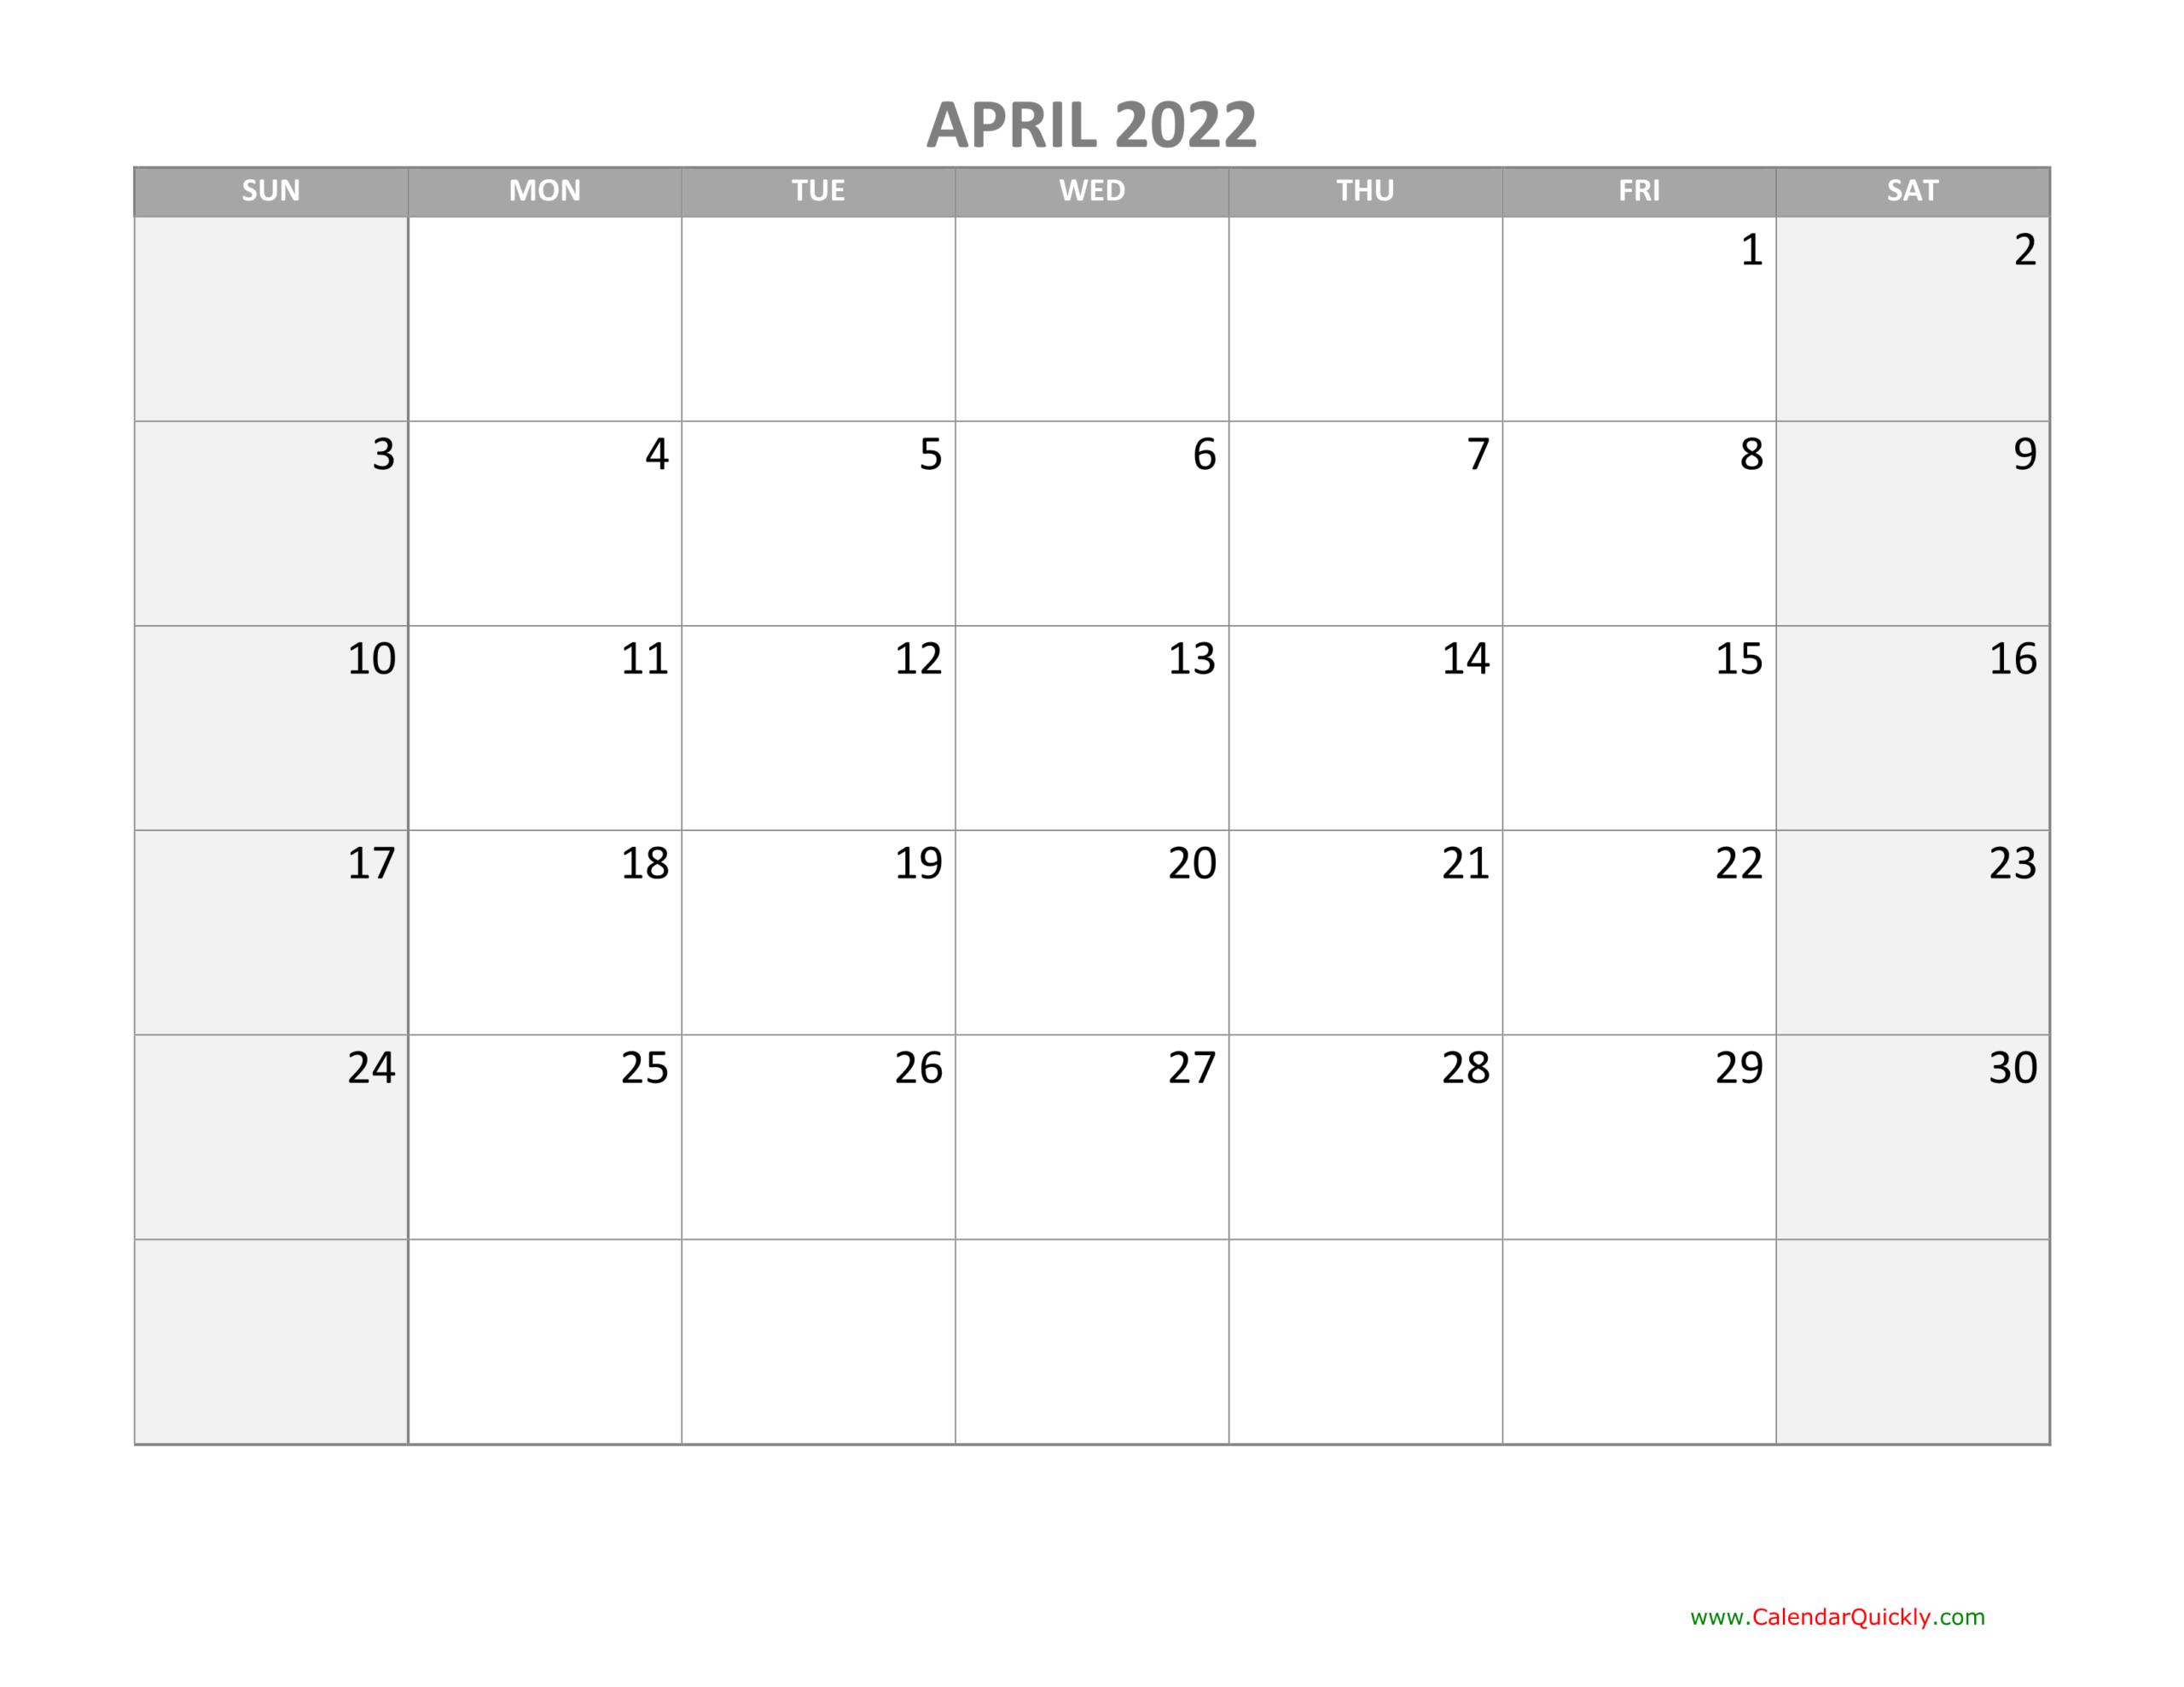 April Calendar 2022 With Holidays | Calendar Quickly  January To April 2022 Calendar Printable